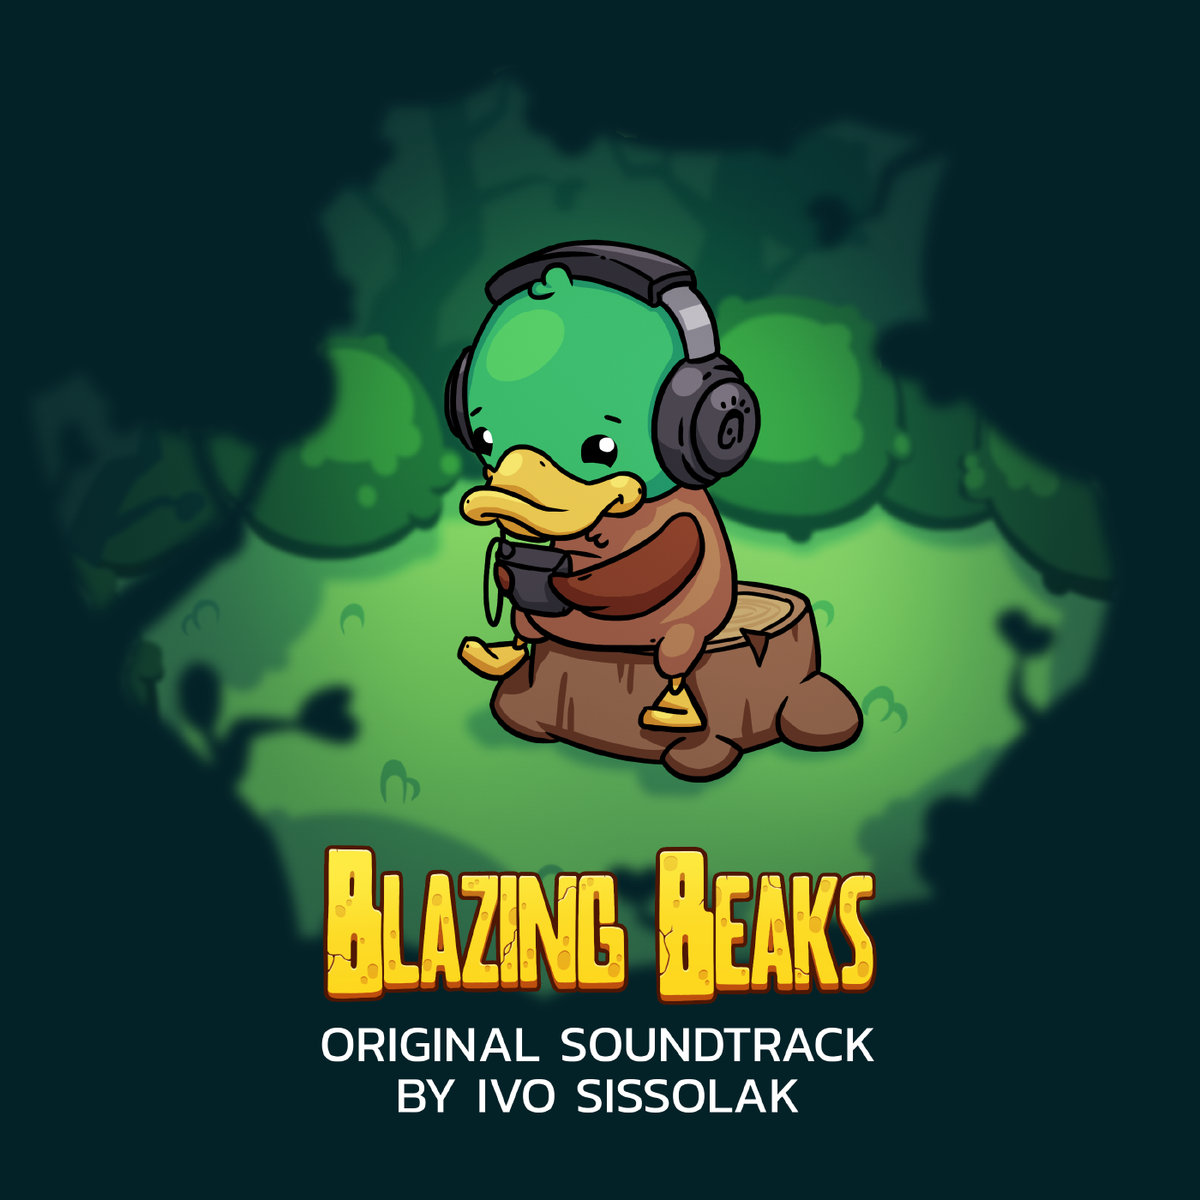 instal the last version for ios Blazing Beaks